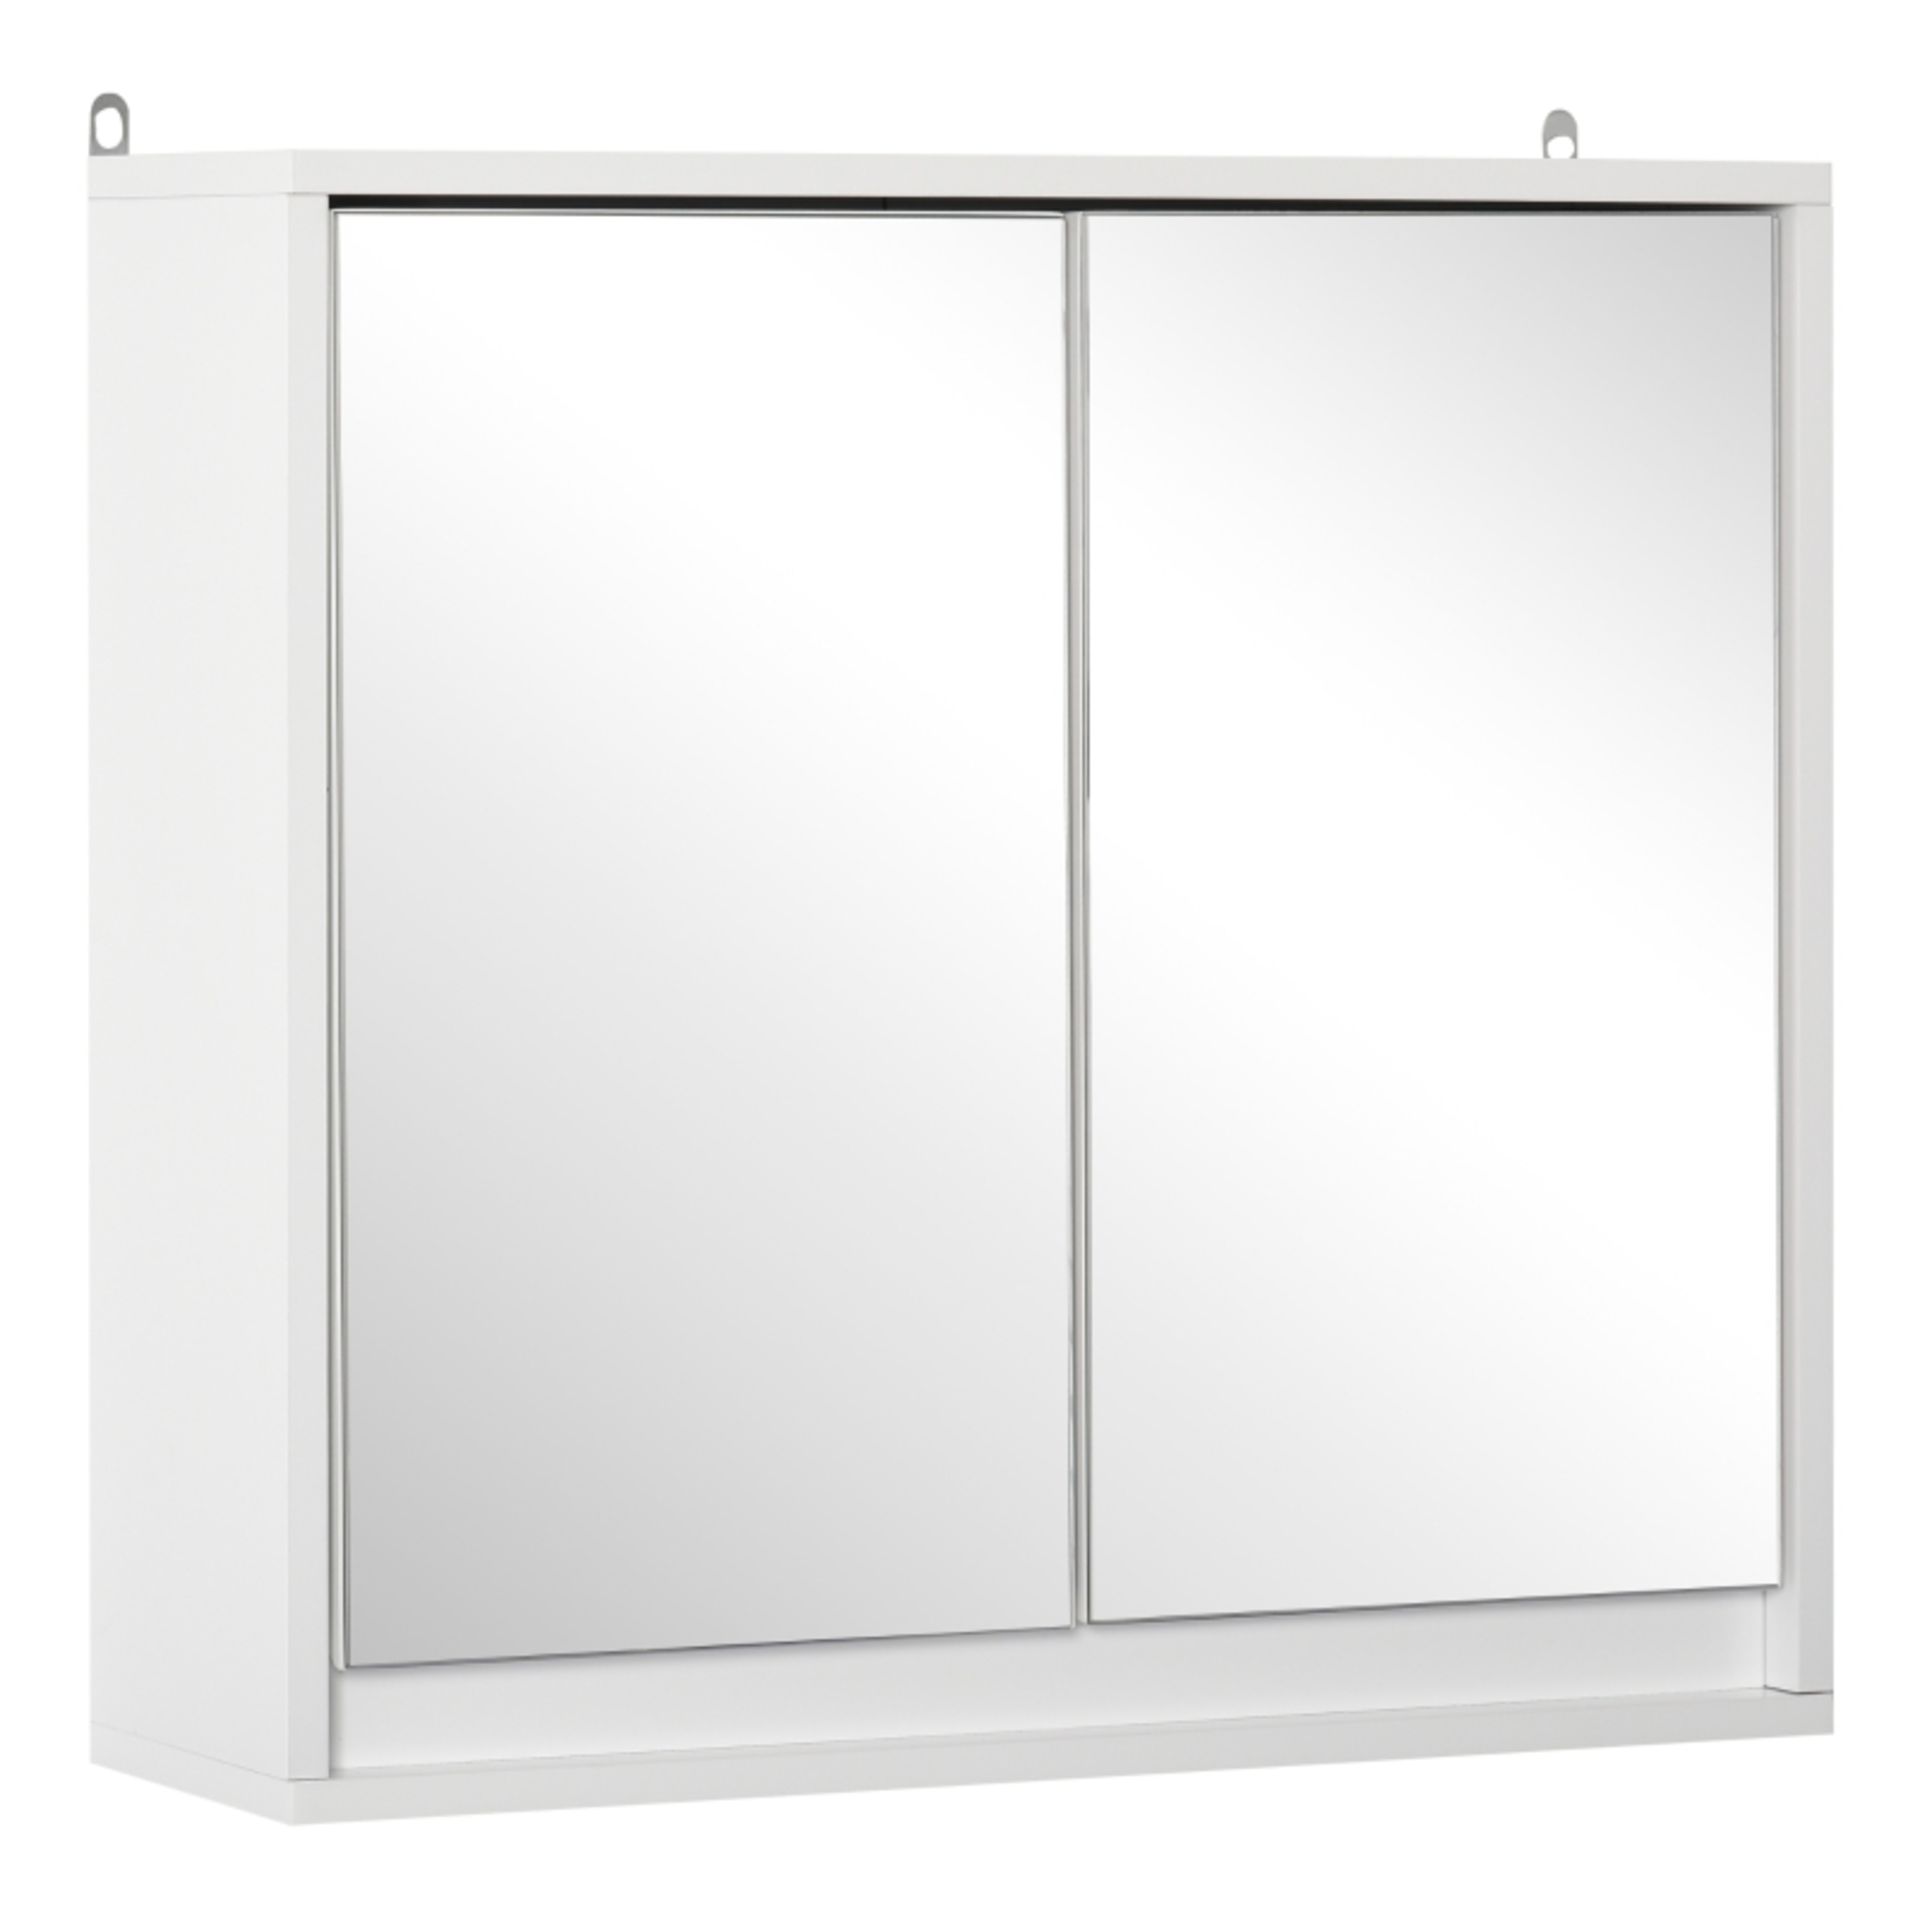 RPP £58.99 -HOMCOM Wall Mounted Mirror Cabinet with Storage Shelf Bathroom Cupboard Double Door